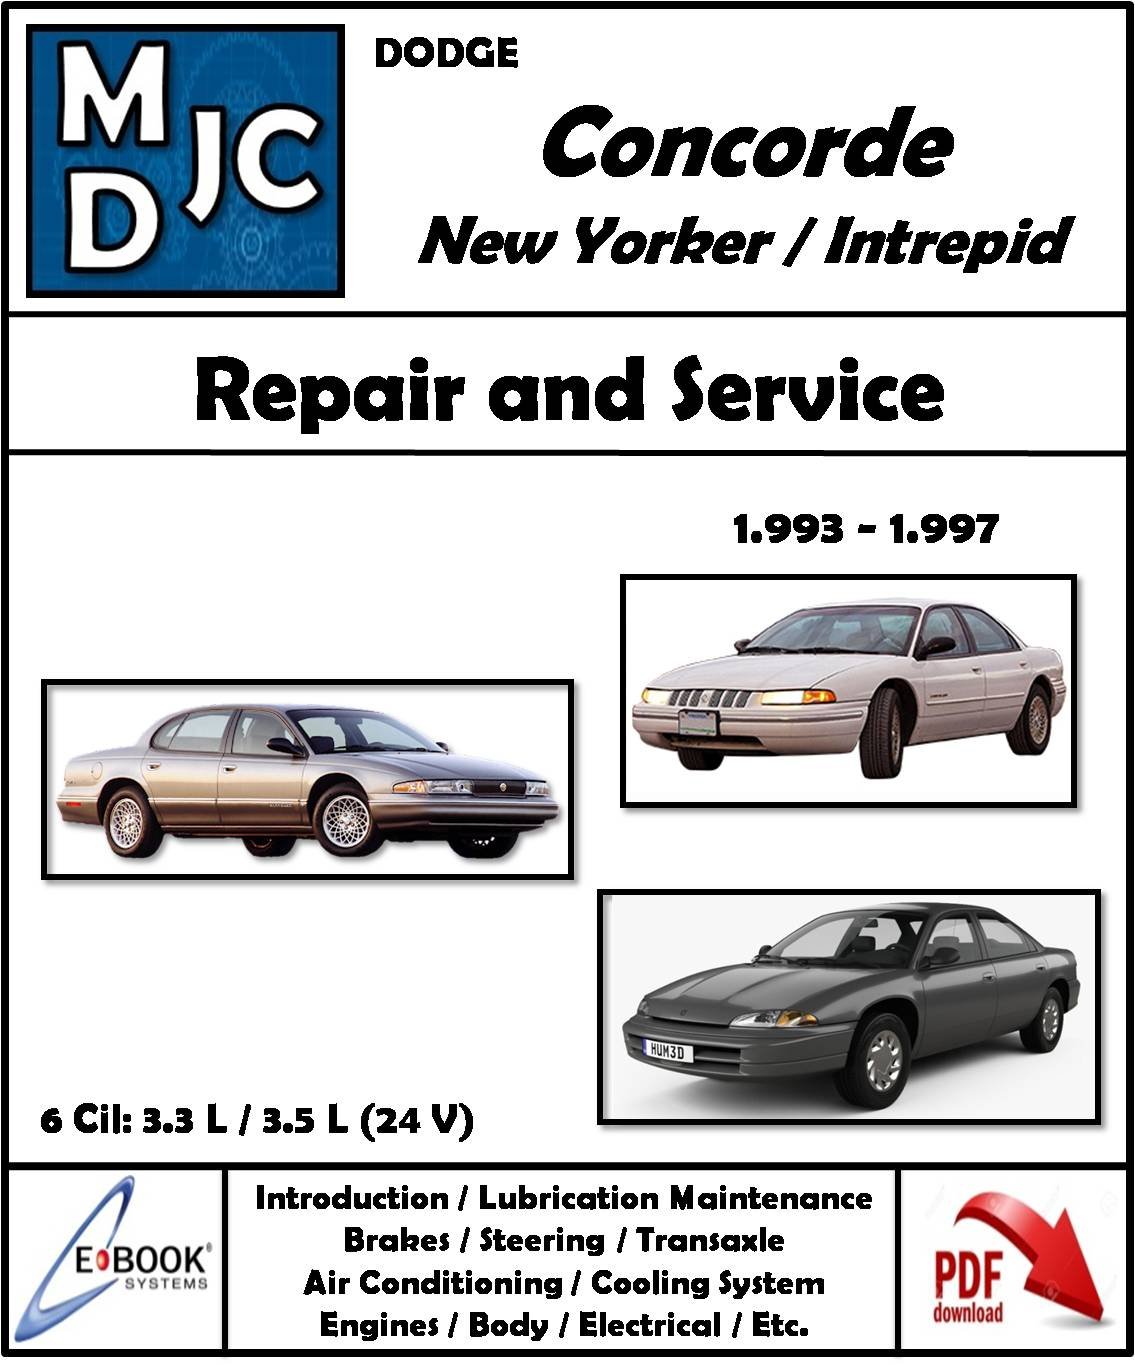 Dodge - Chrysler Intrepid / New Yorker / Concorde / Vision ( 1993 - 1997 )